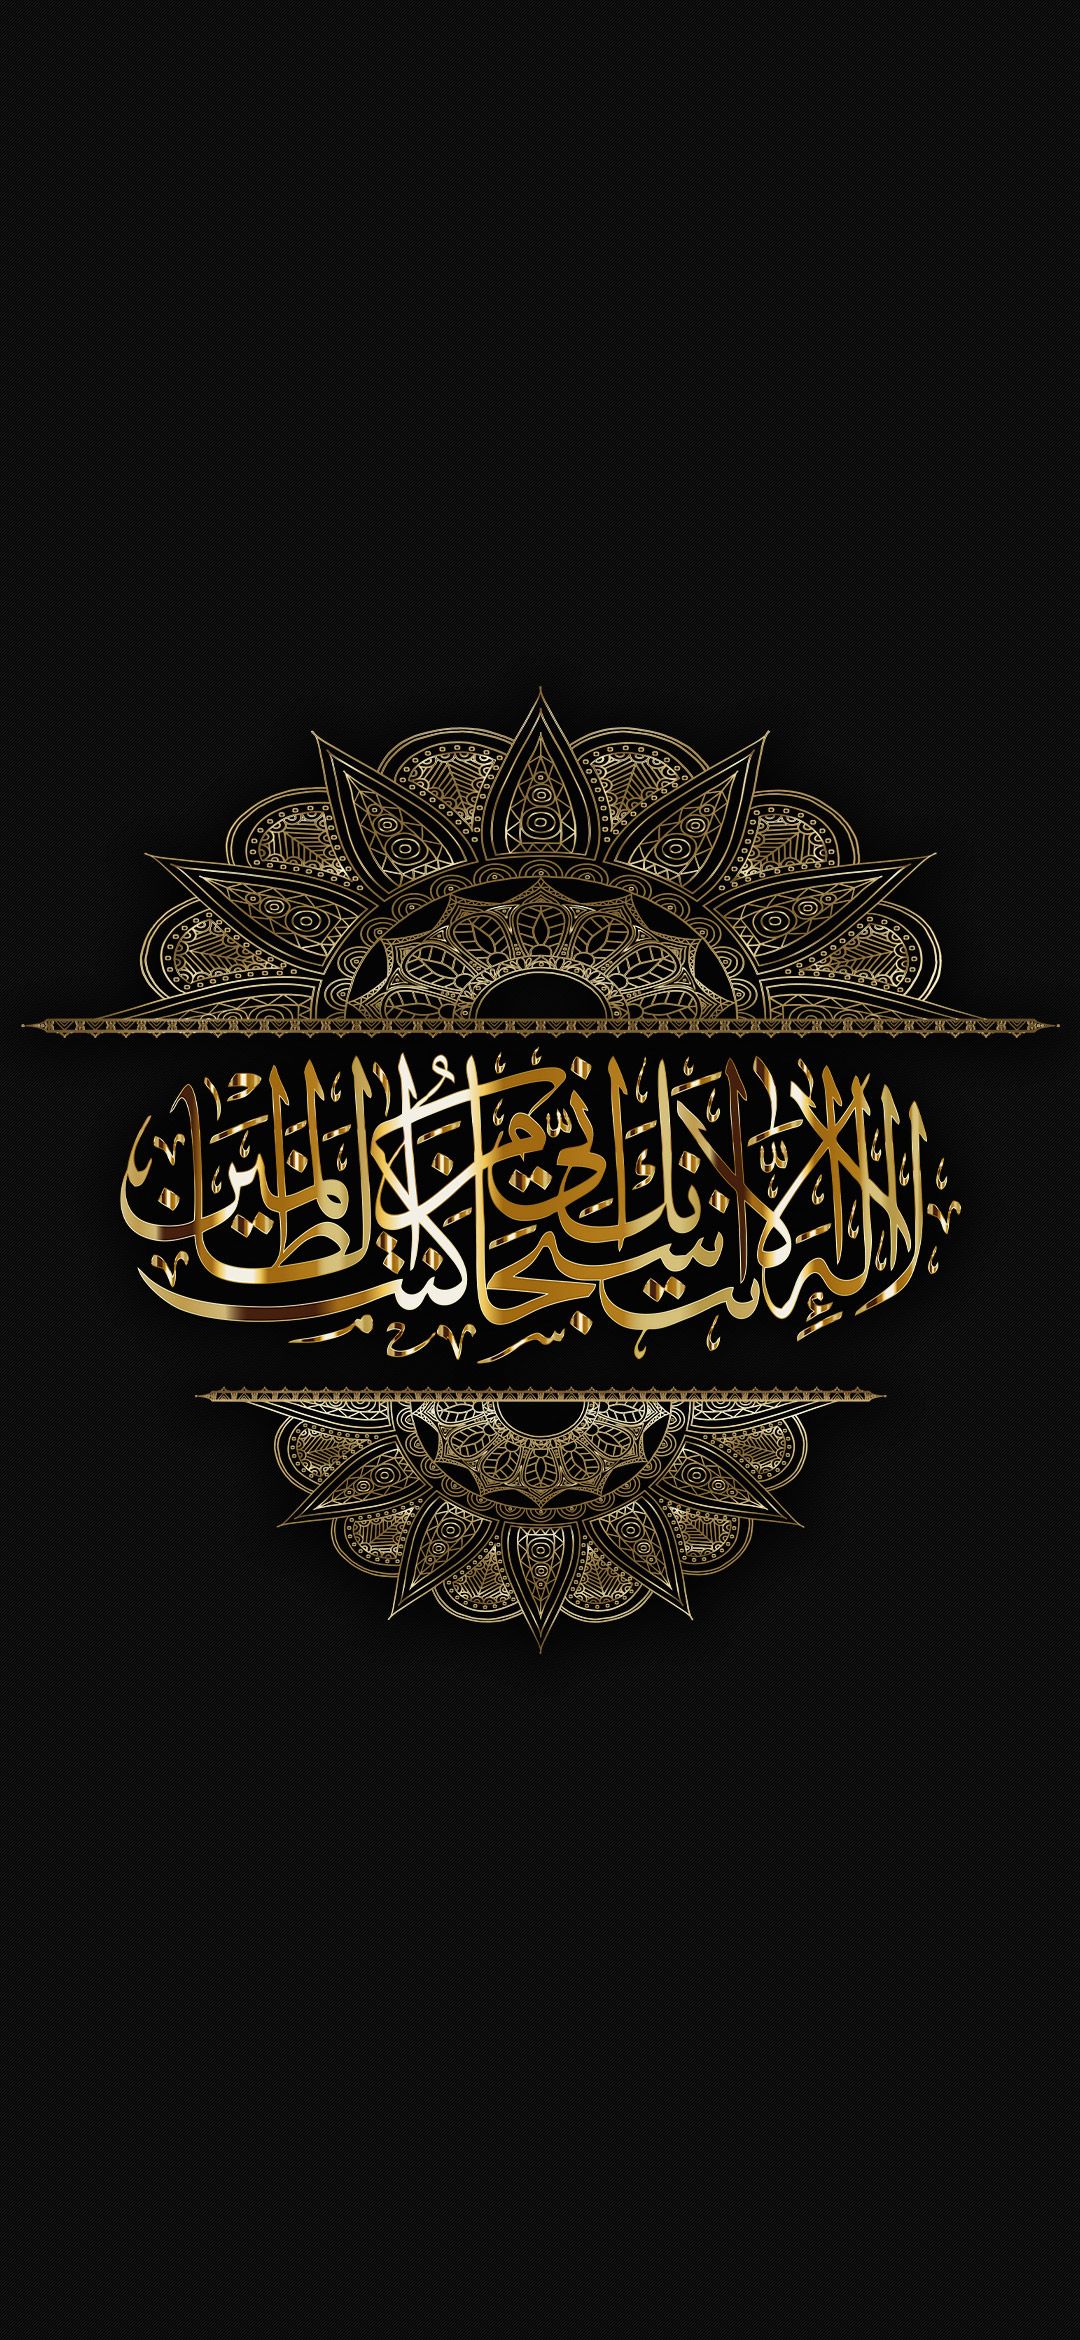 Quran Islamic Calligraphy Art - 1080x2340 Wallpaper 